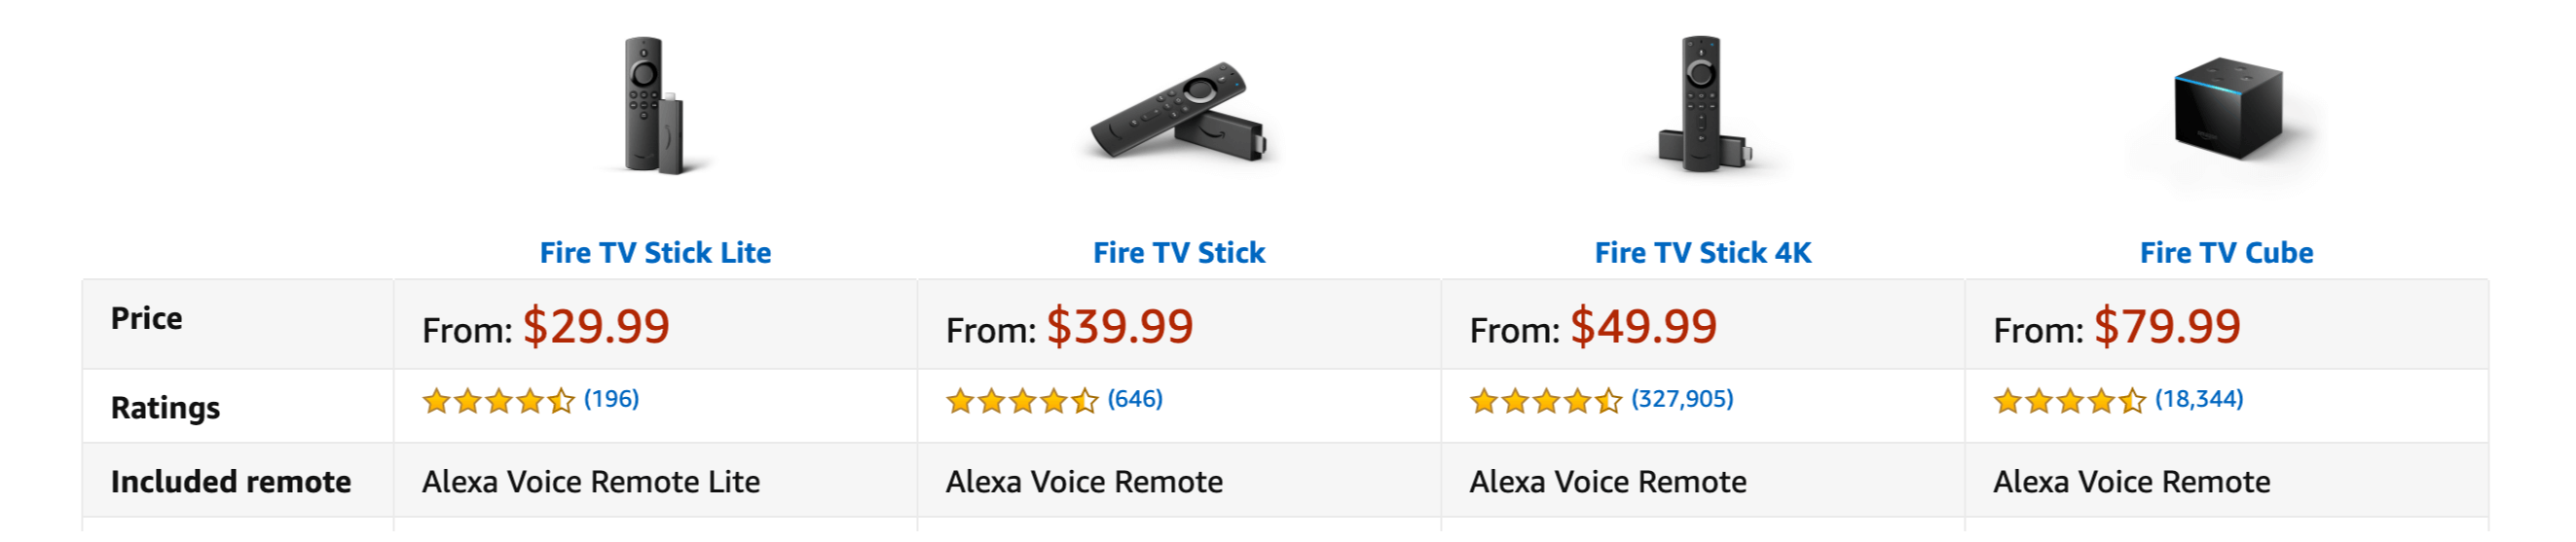 Amazon-FireTv-Sticks-Price